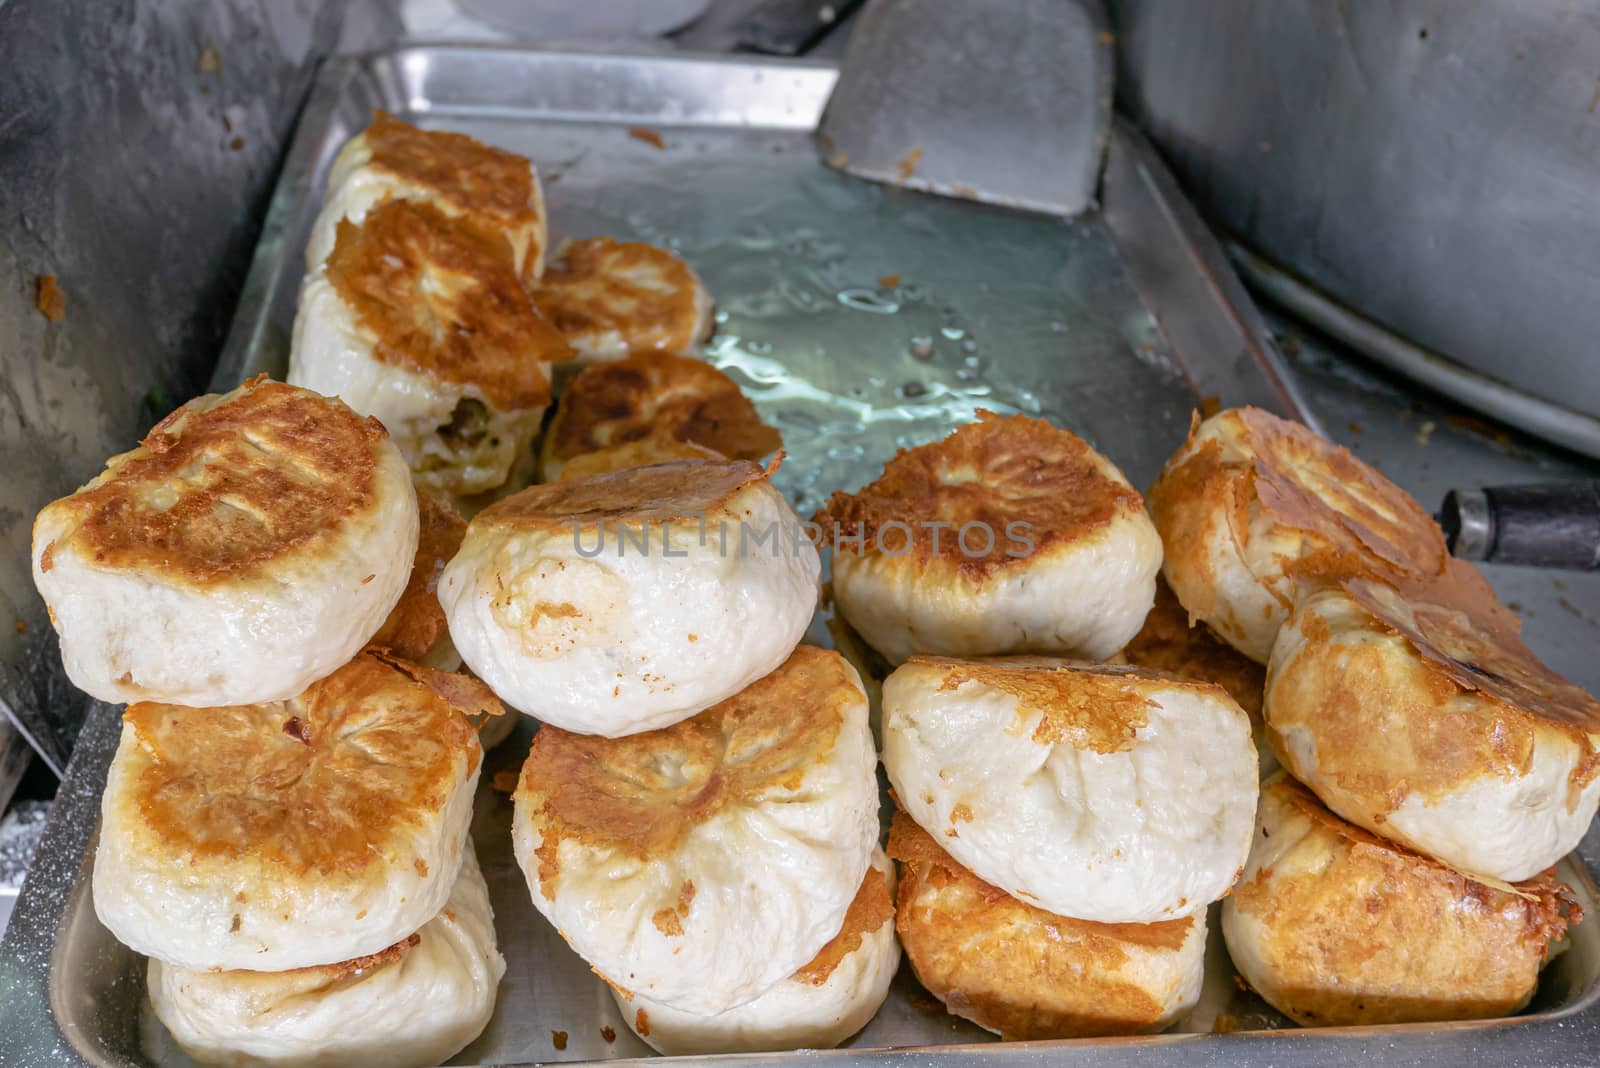 The close up of Taiwanese pan fried pork buns (Sheng Jian Bao) at food street market in Kaohsiung, Taiwan.